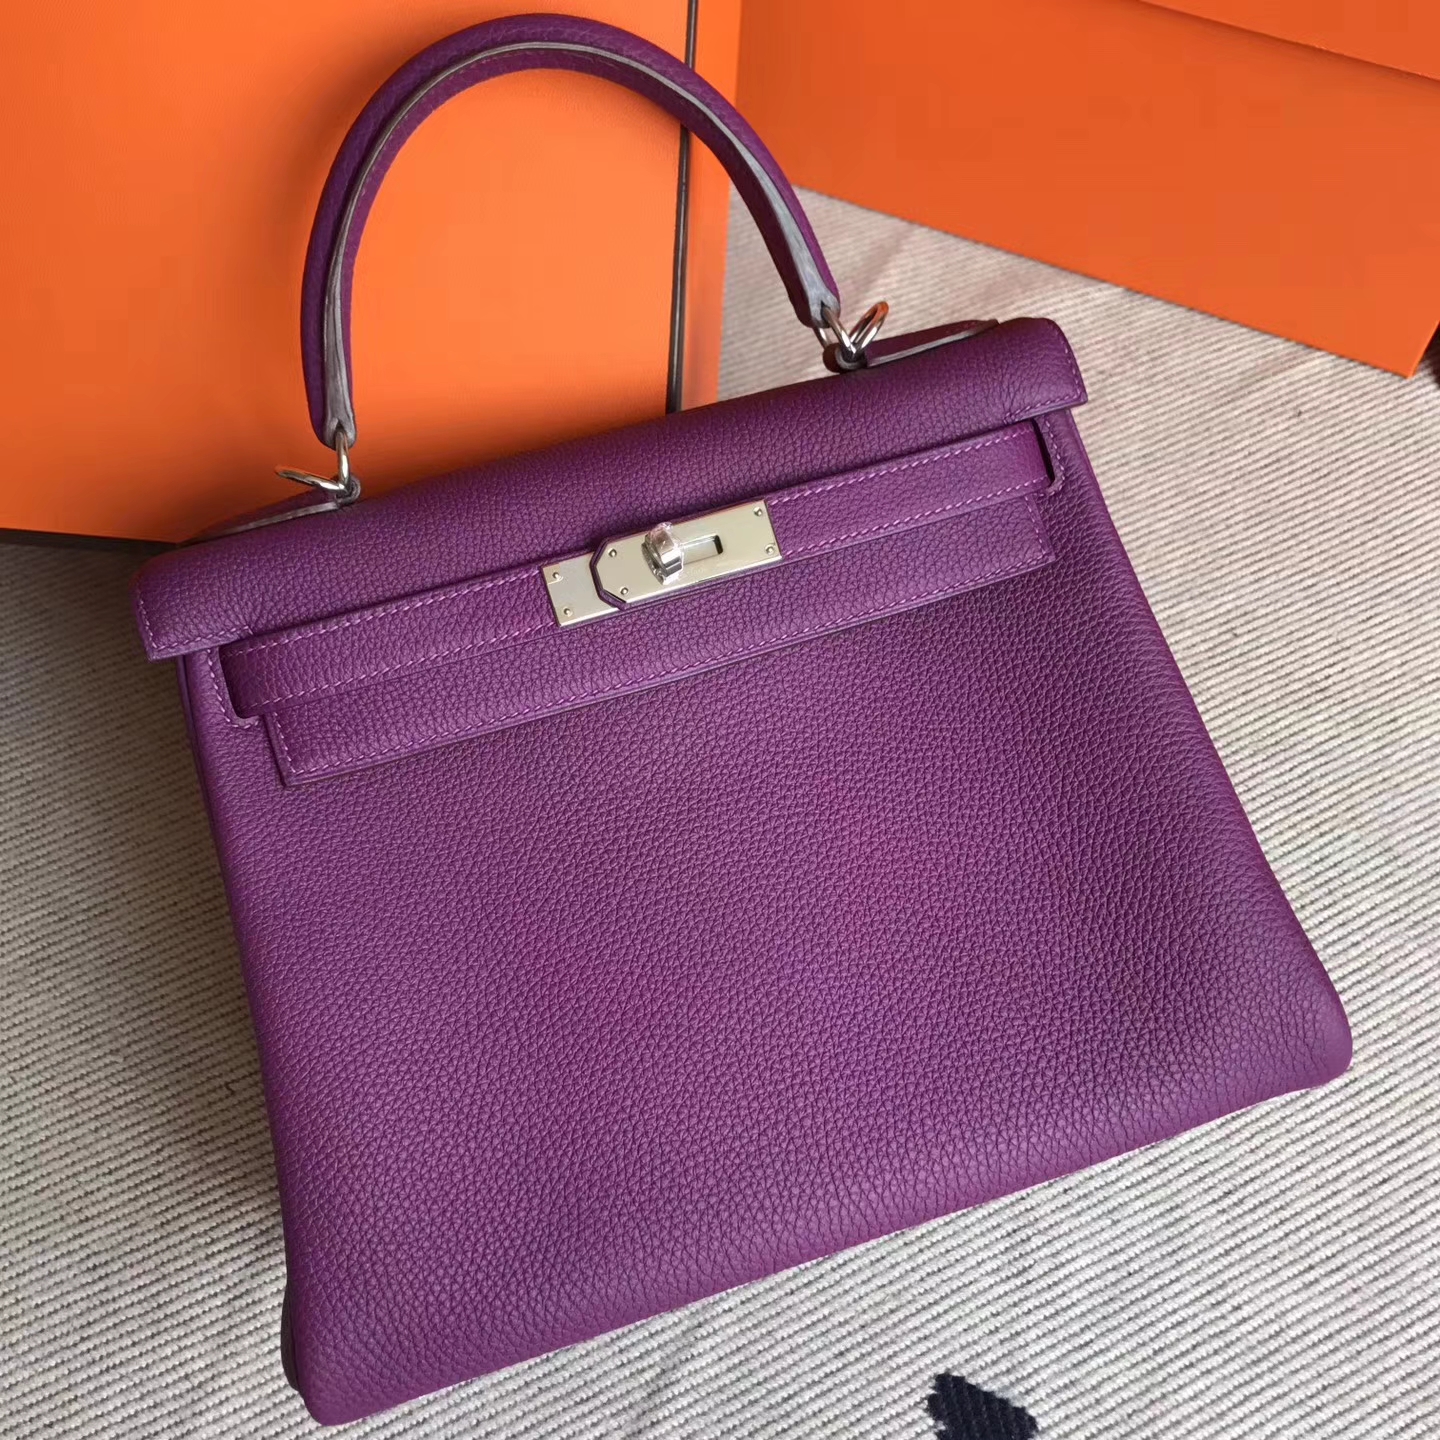 New Arrival Hermes P9 Amenone Purple Togo Leather Kelly28cm Handbag